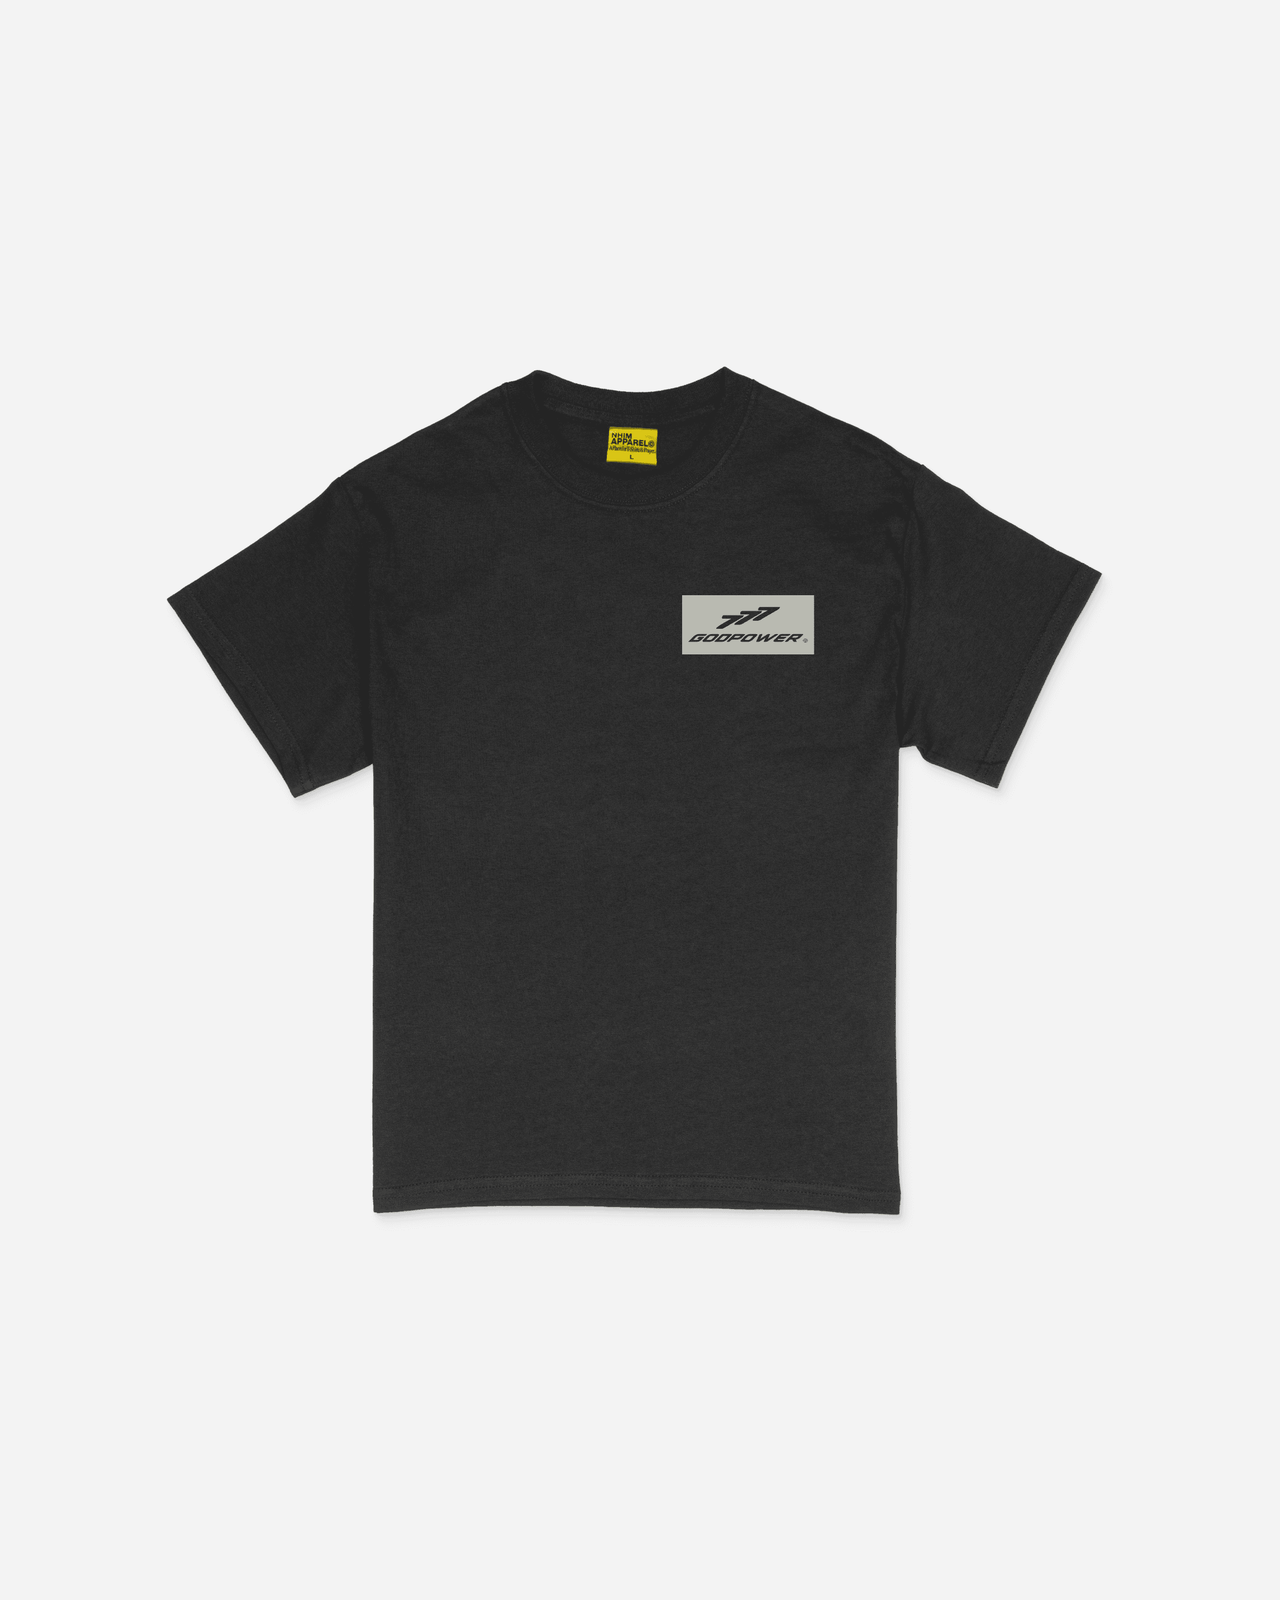 GODPOWER black christian t-shirt by NHIM Apparel Christian clothing brand